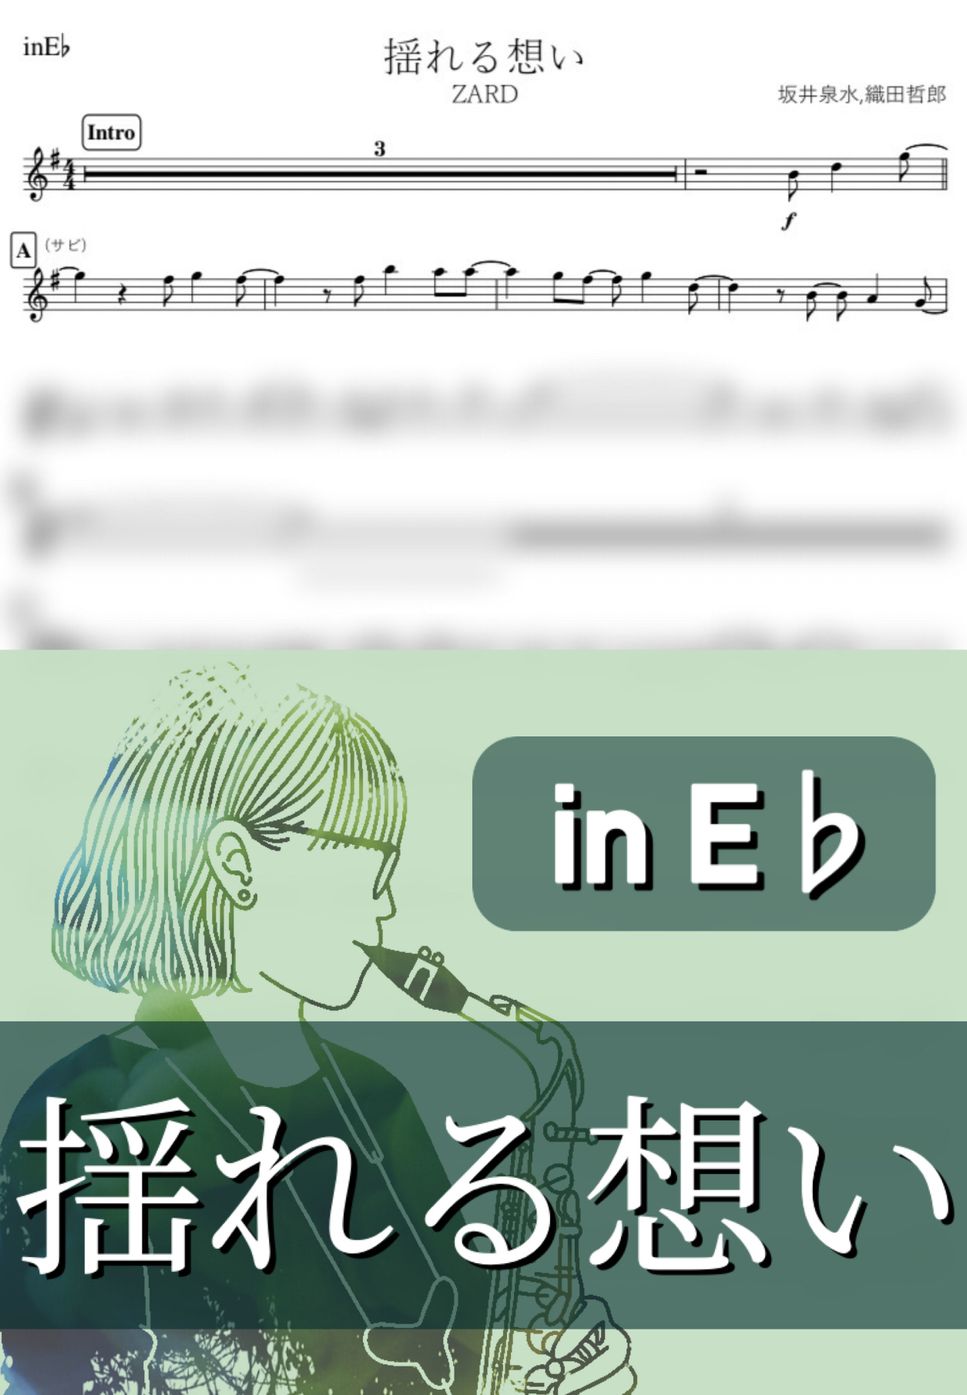 ZARD - 揺れる想い (E♭) by kanamusic